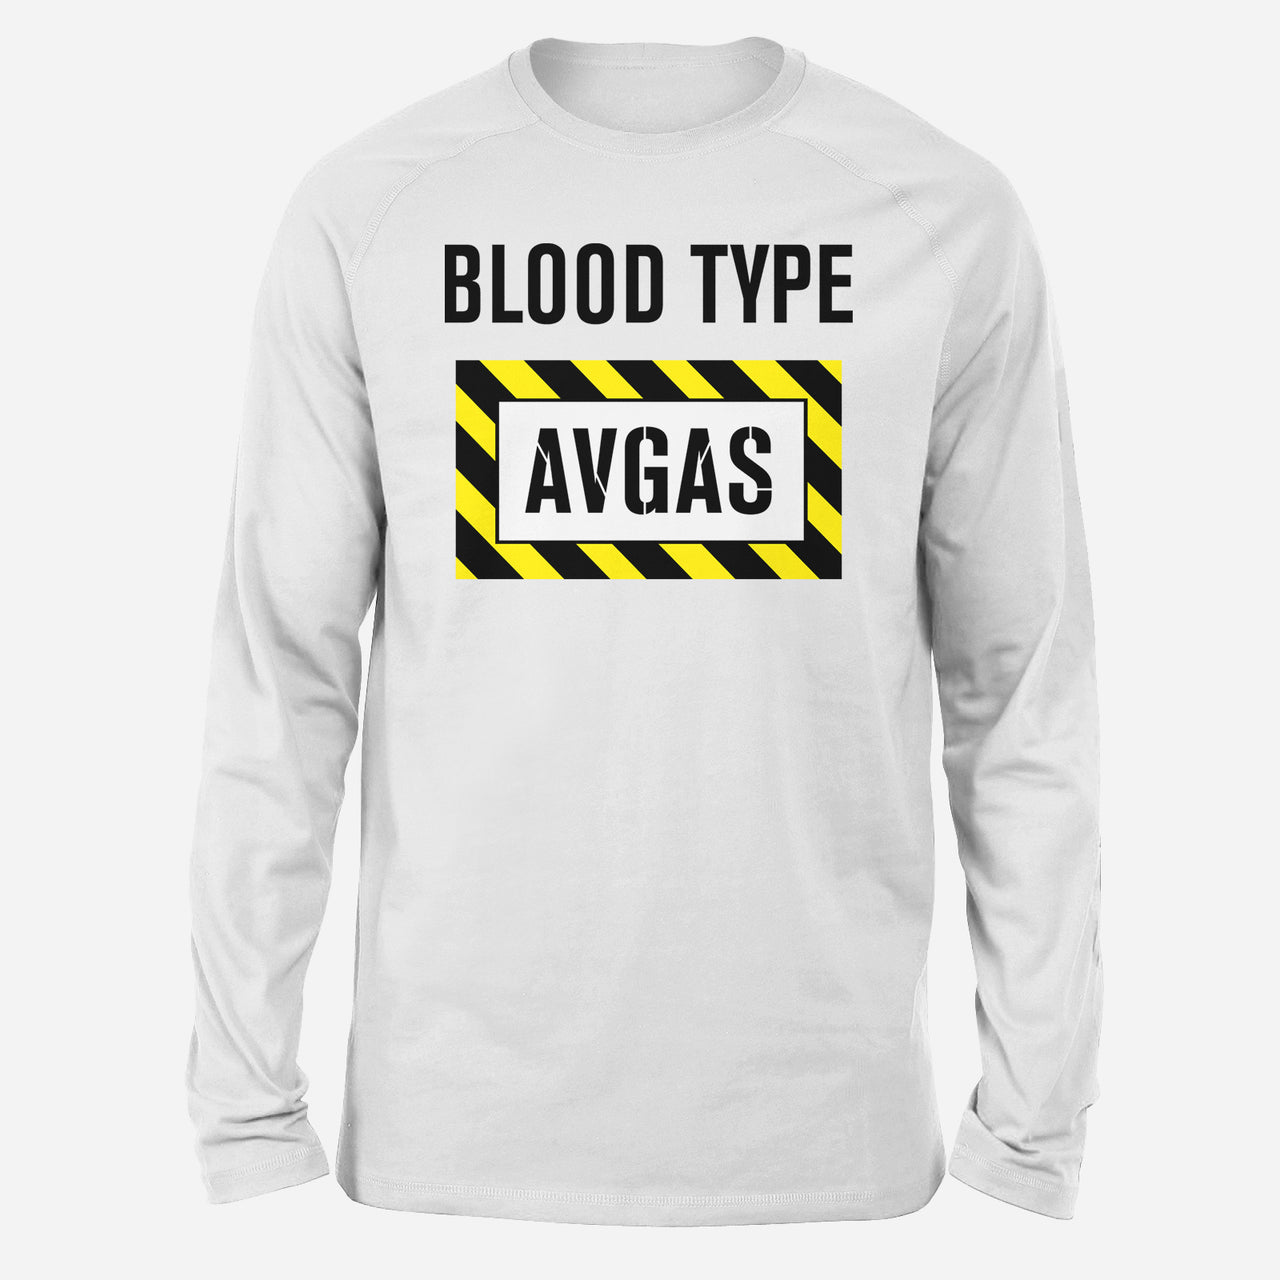 Blood Type AVGAS Designed Long-Sleeve T-Shirts